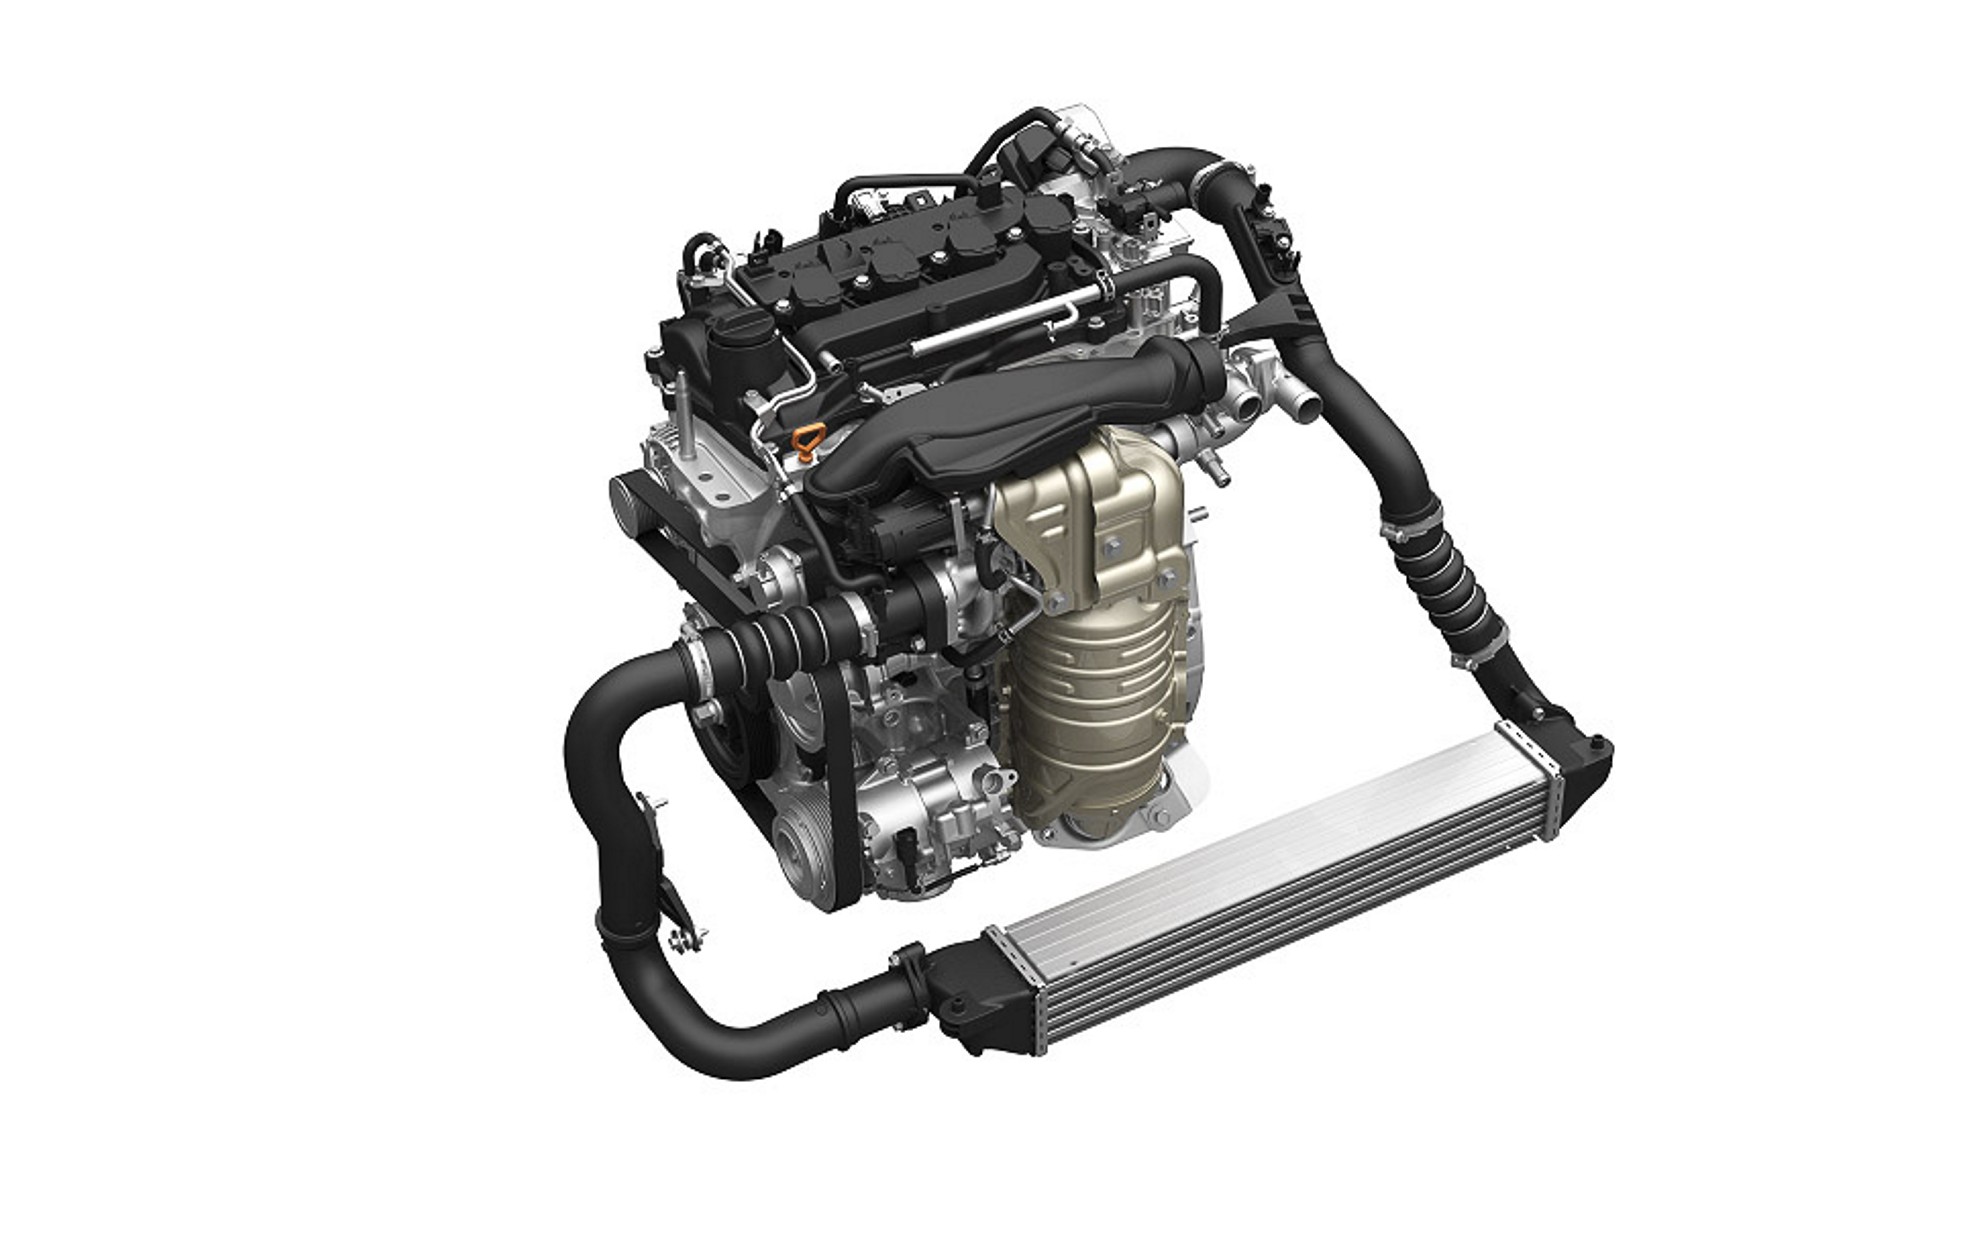 Honda Announces All-New VTEC TURBO Engine Series